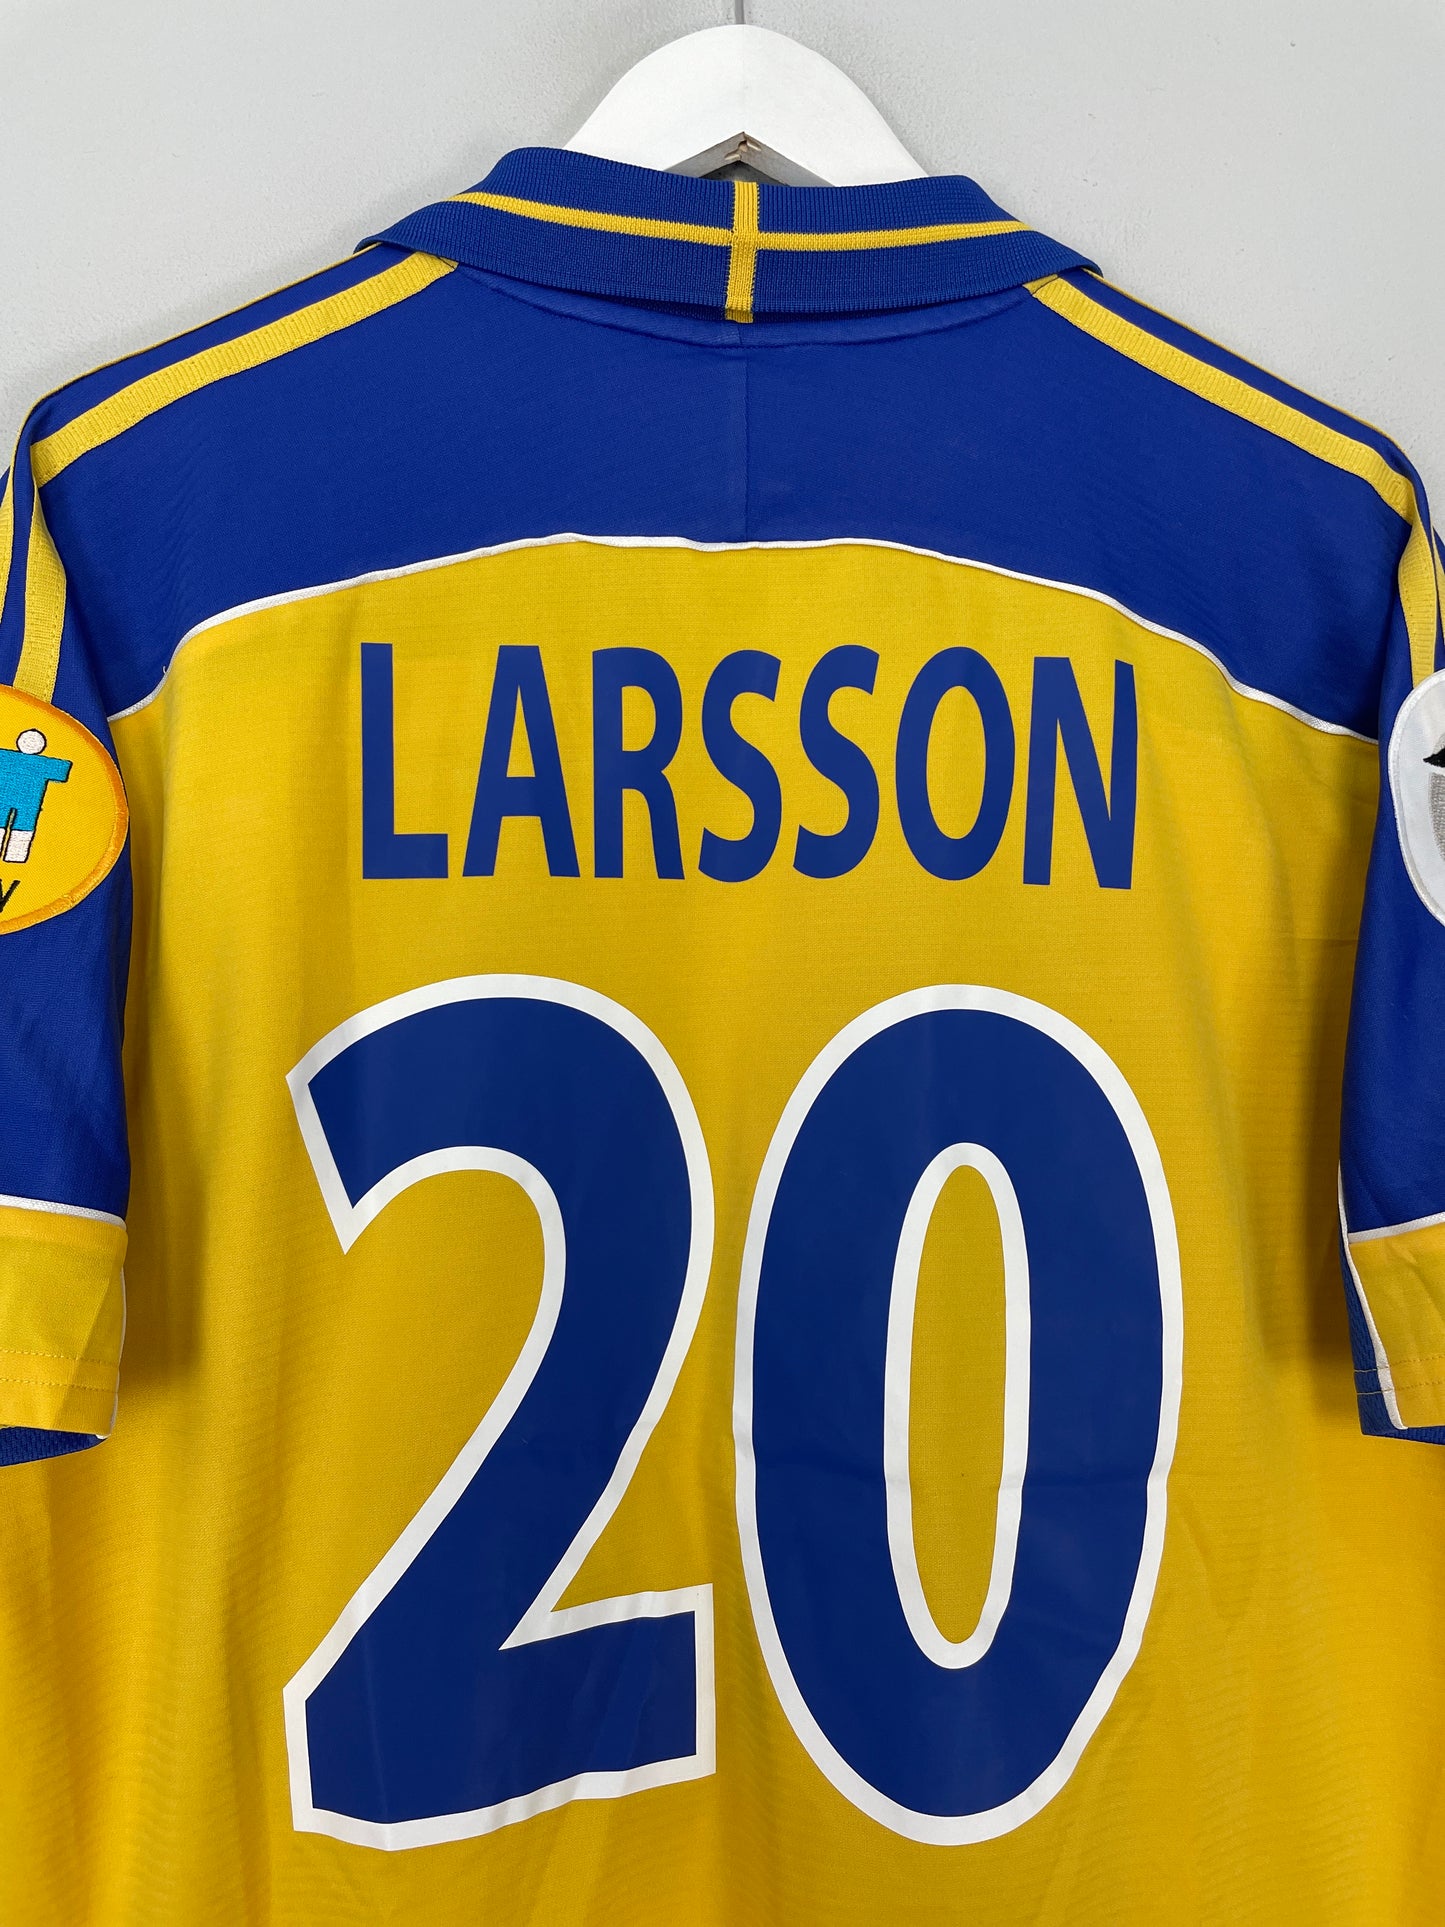 2000/02 SWEDEN LARSSON #20 HOME SHIRT (L) ADIDAS